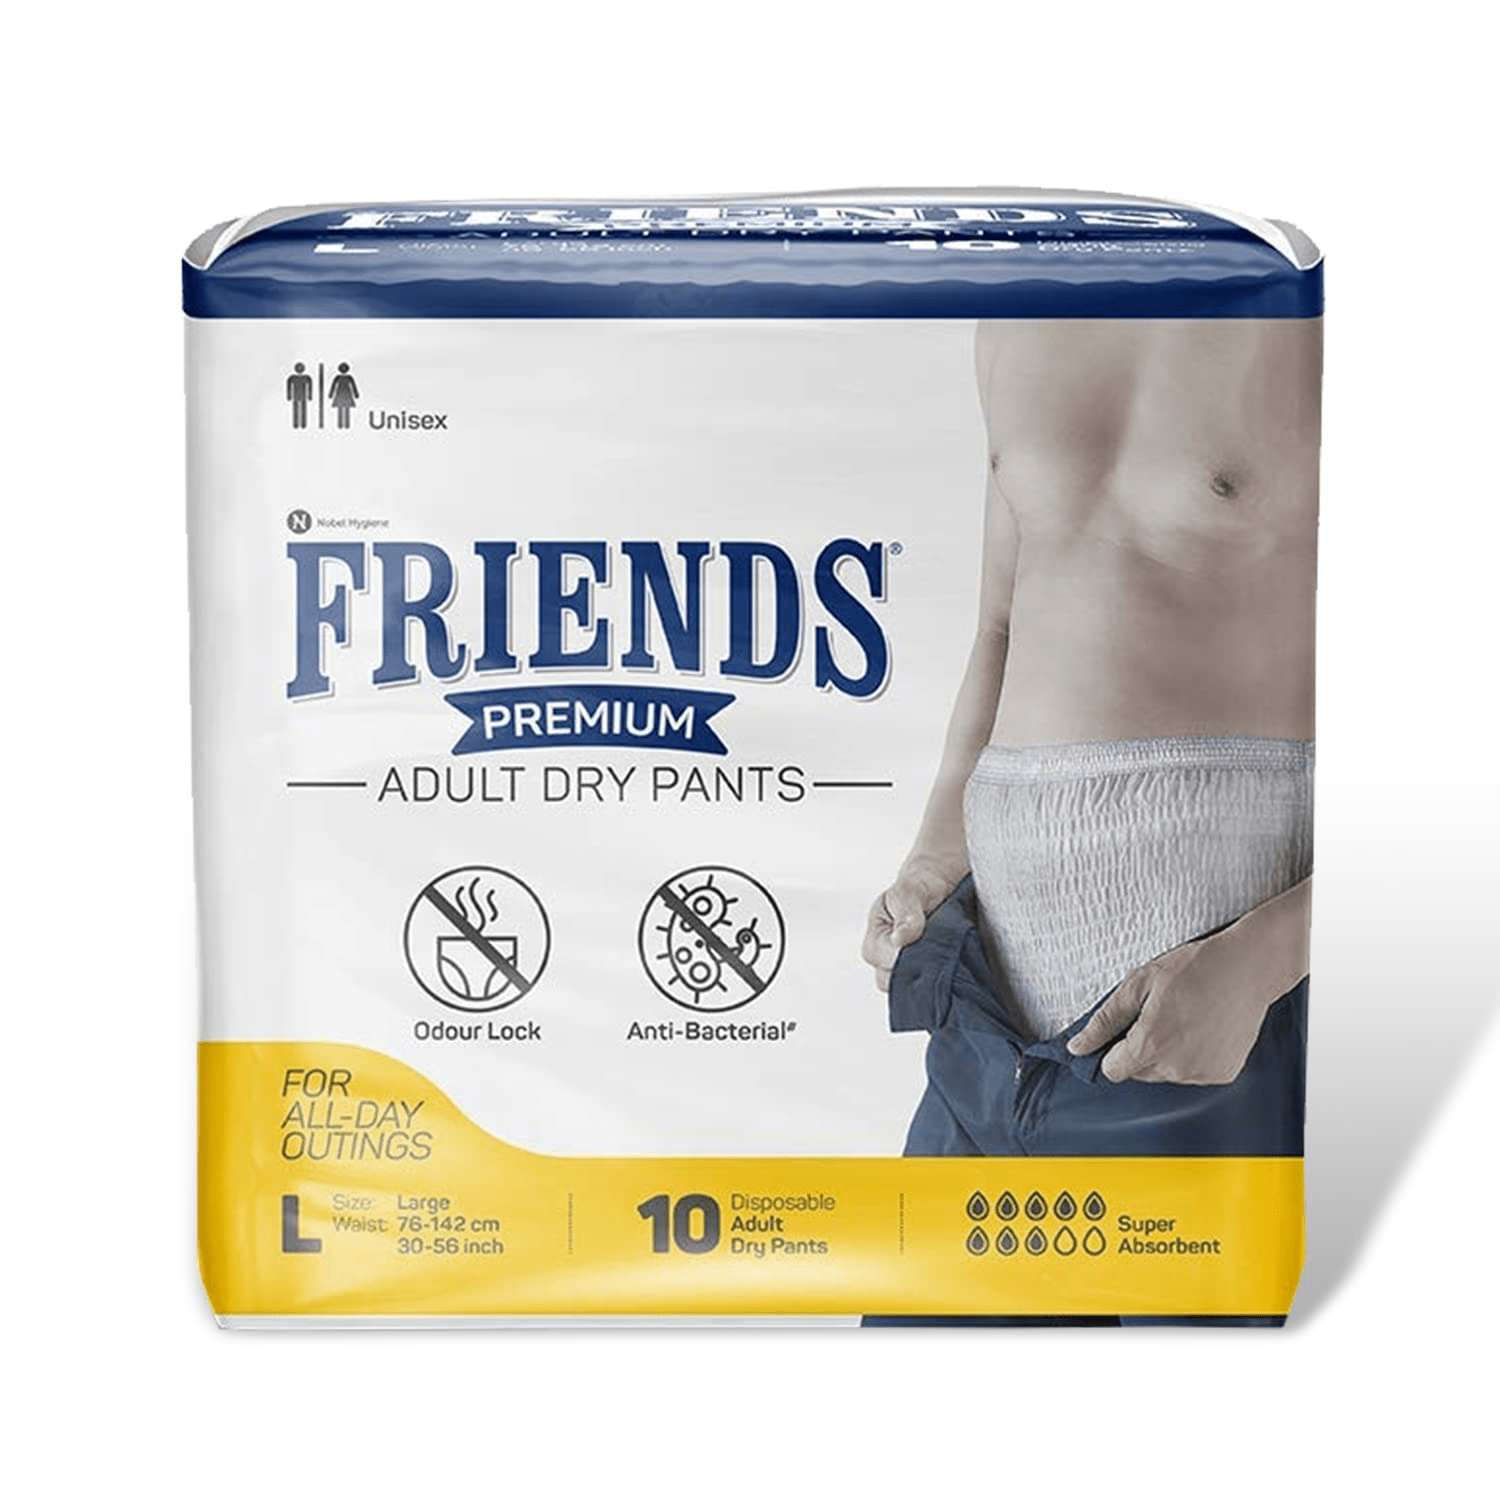 Friends Adult Insert Pads